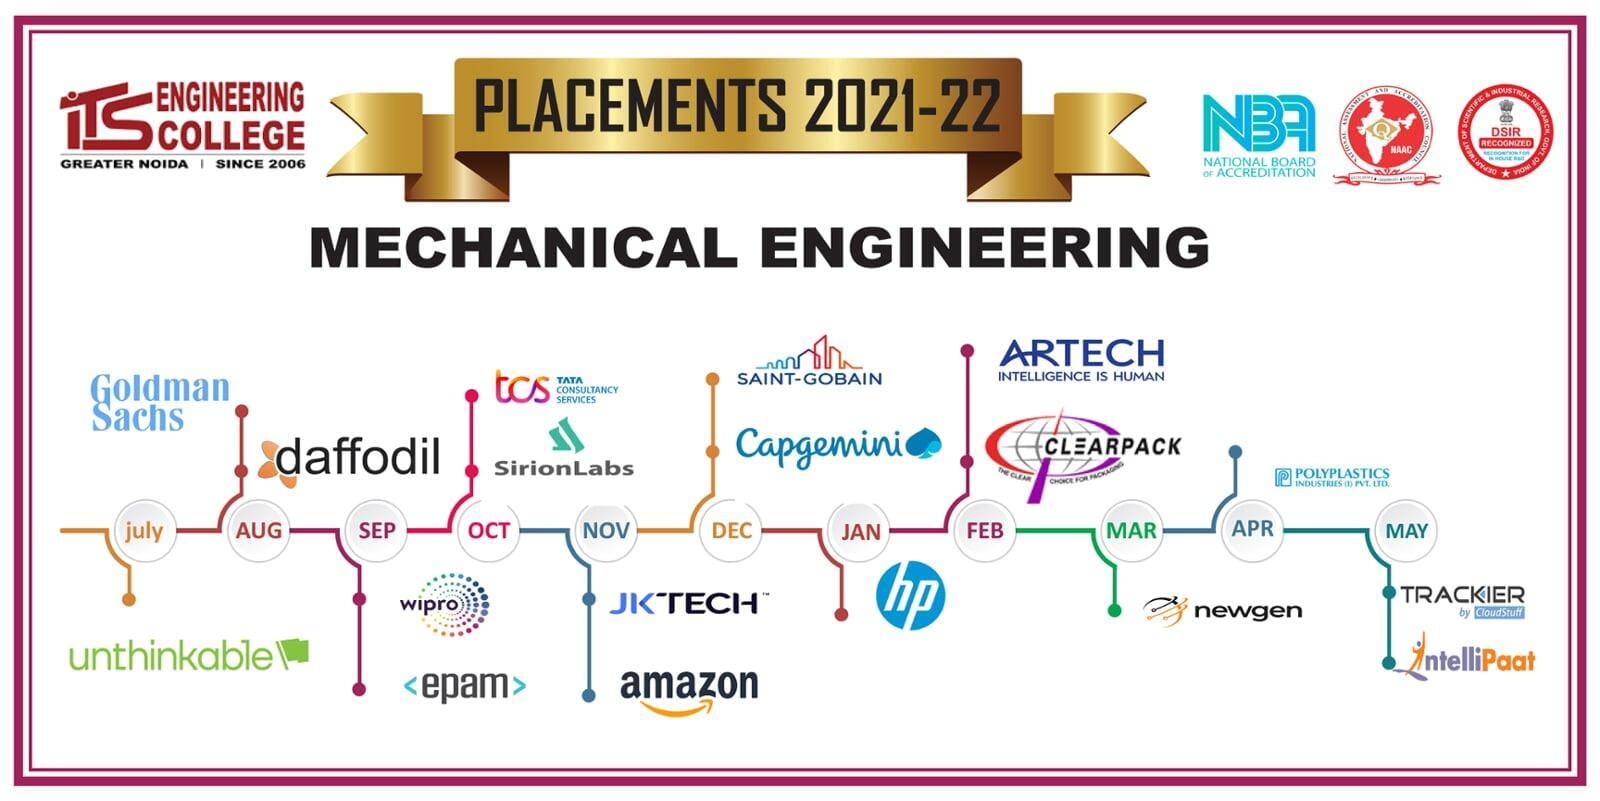 Mechanical Engineering Recruiters 2022 ITS Engineering College